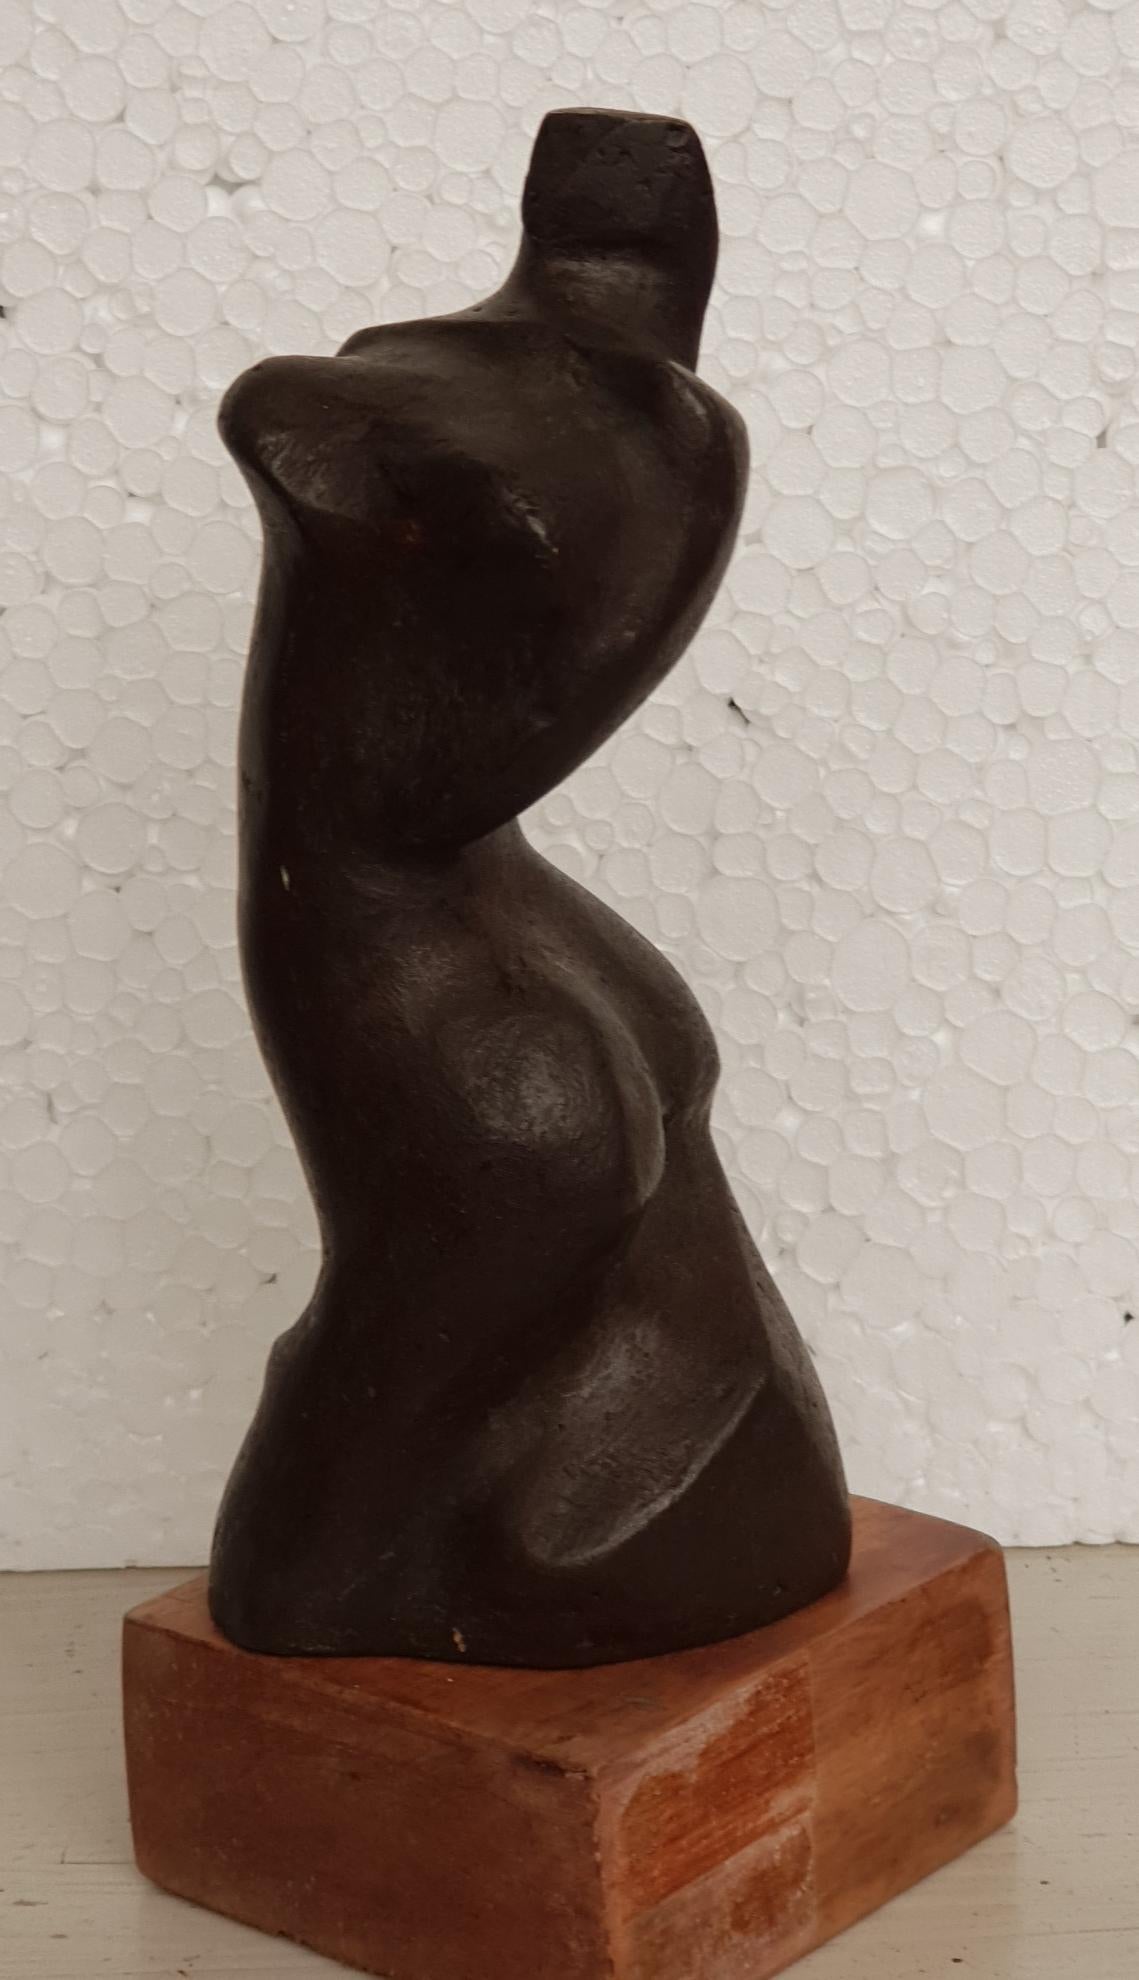 Niranjan Pradhan Nude Sculpture - Bronze Sculpture, Nude, Brown by Modern Indian Sculptor "In Stock"